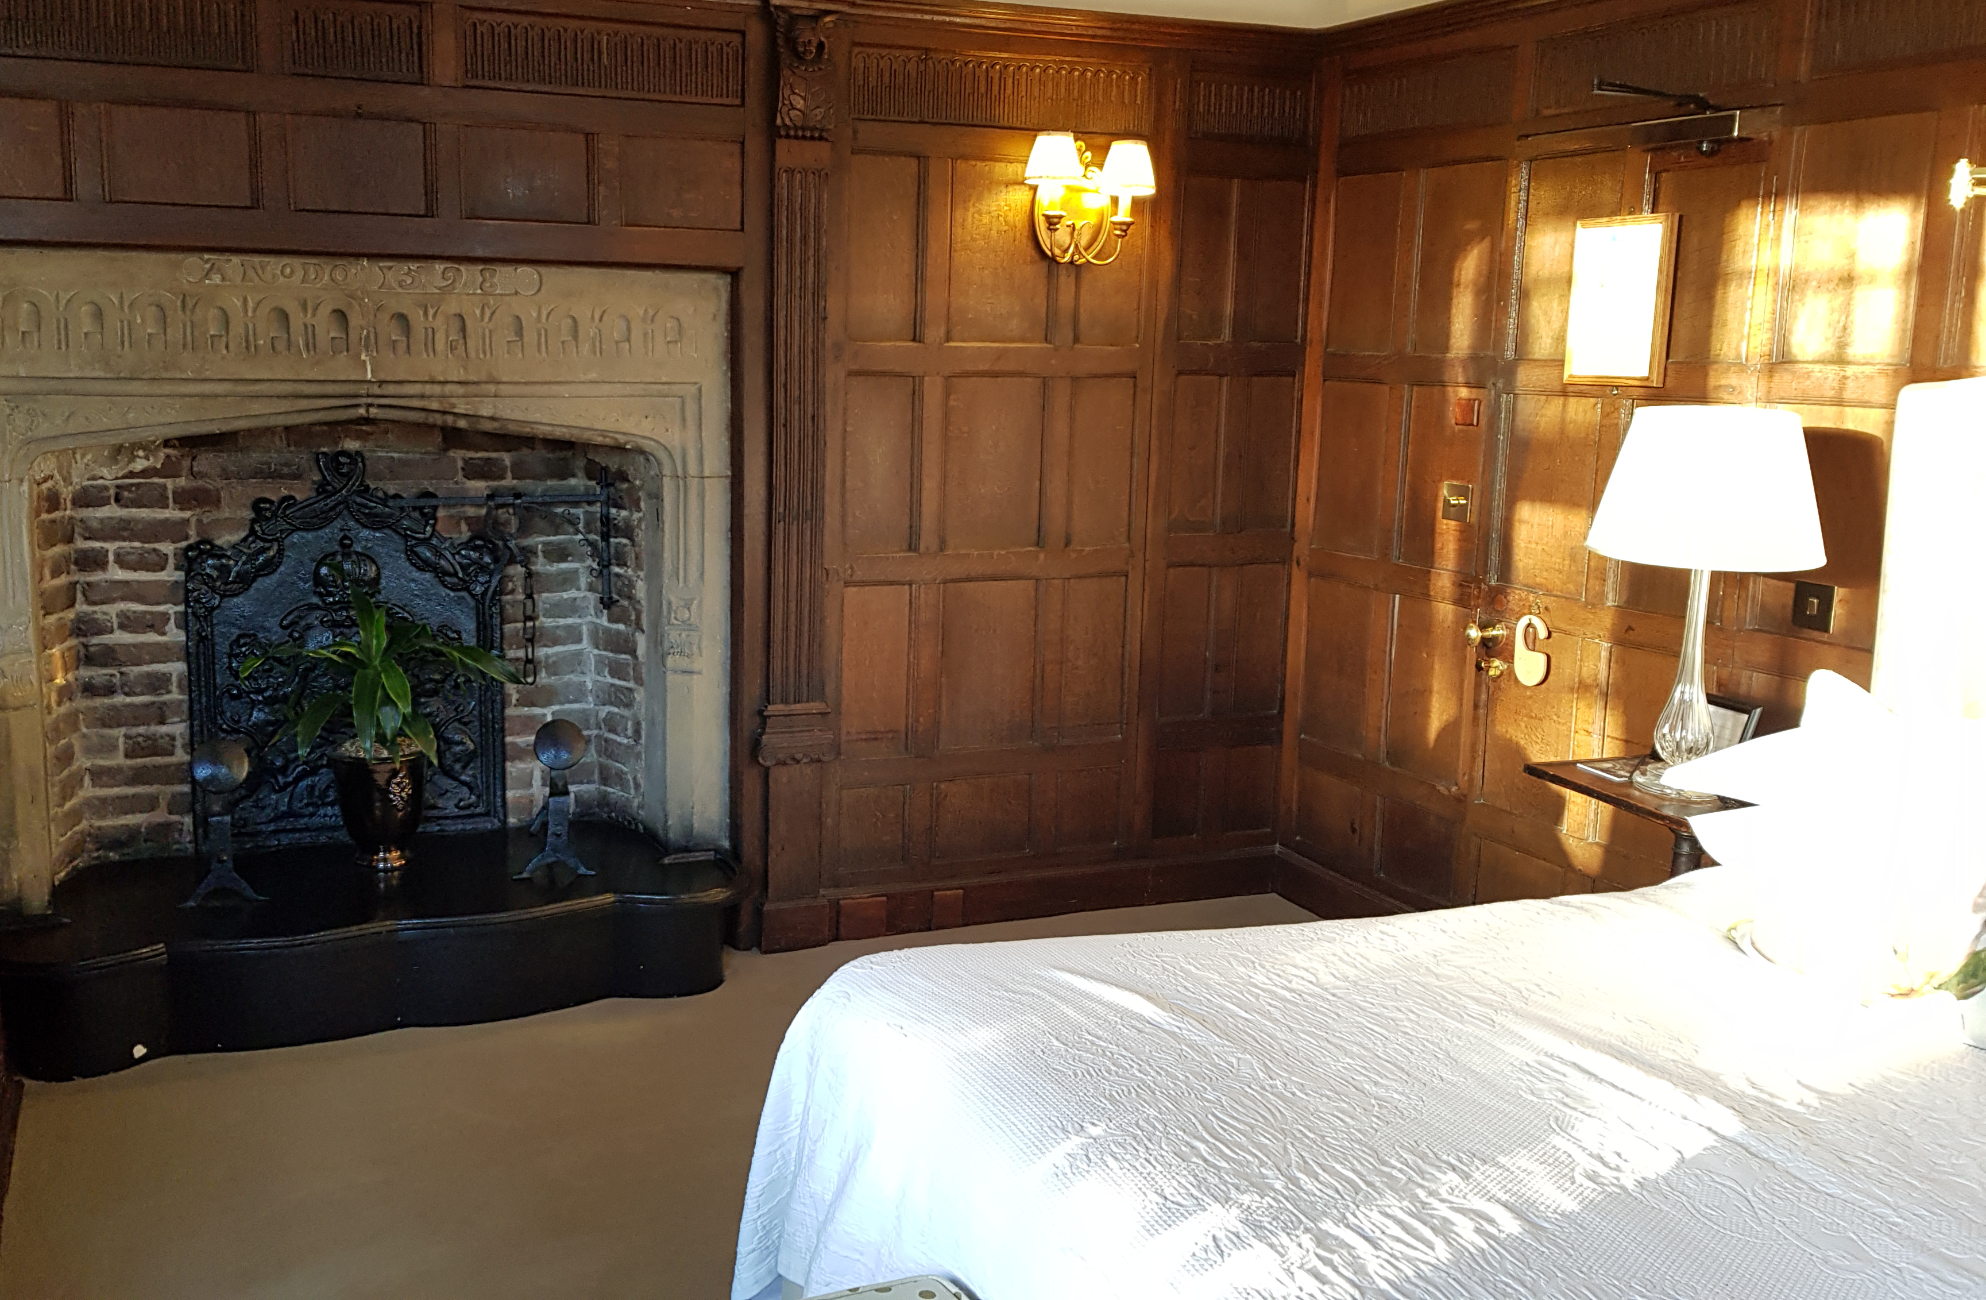 Gravetye fireplace in 'Magnolia' bedroom